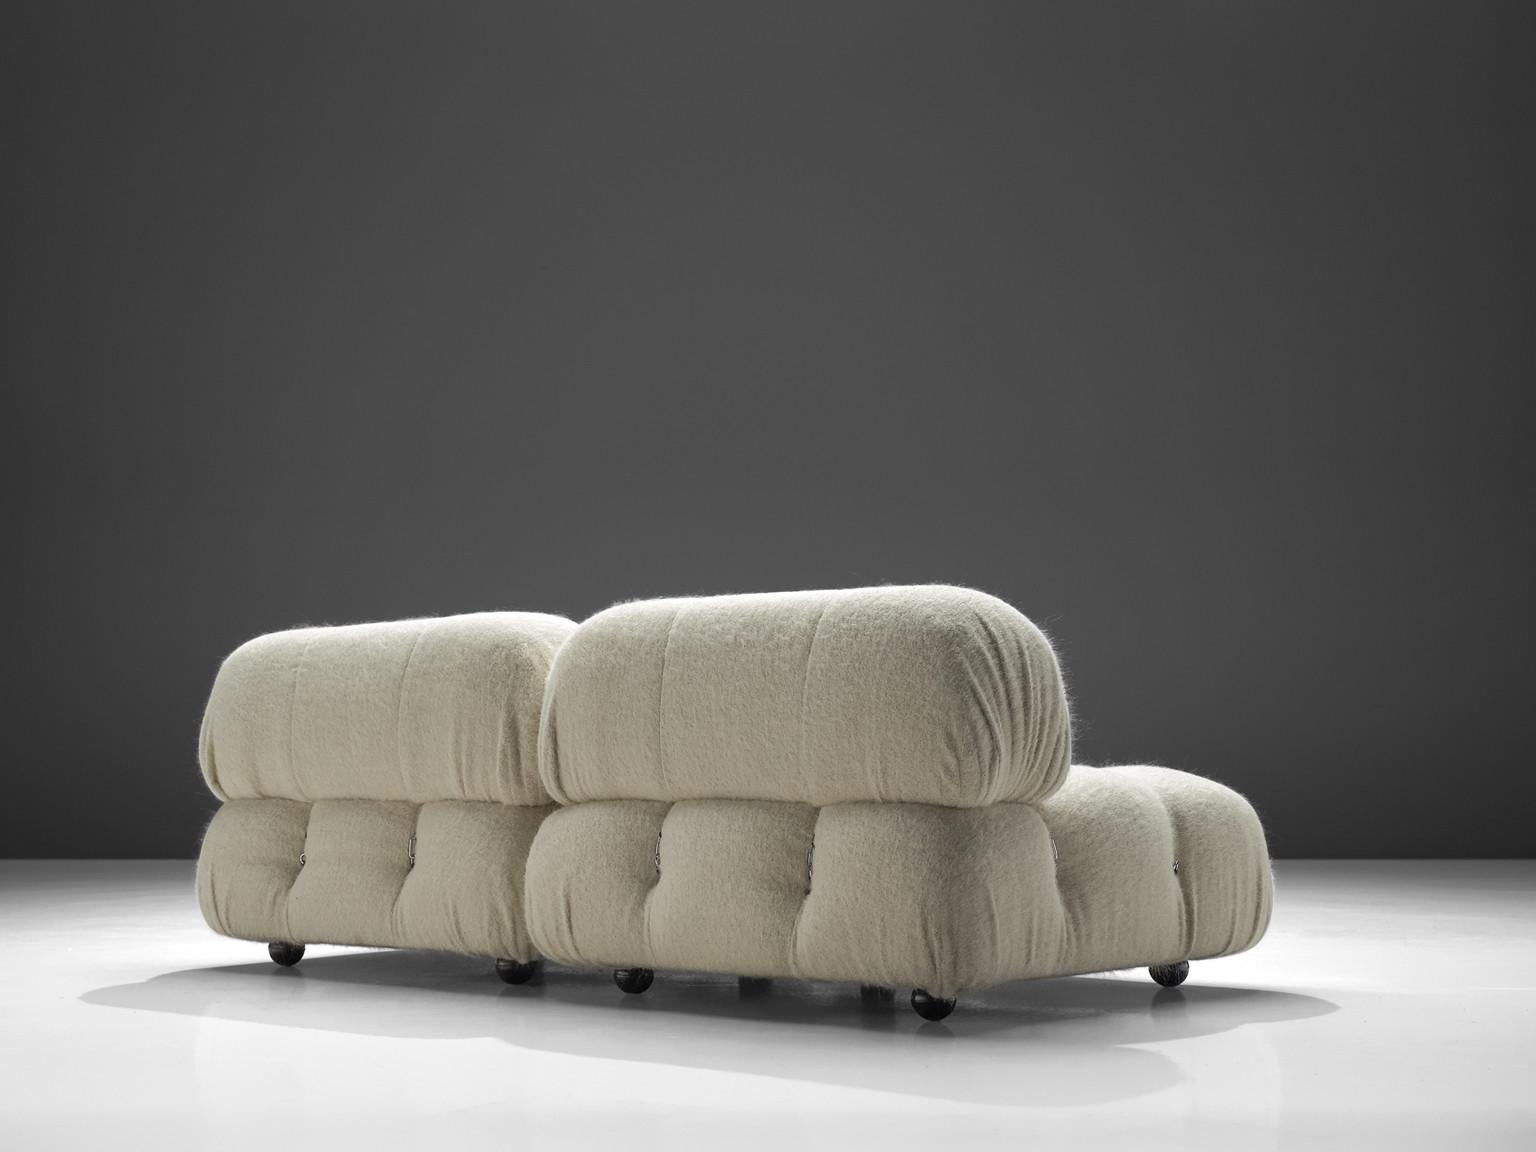 Wool 'Camaleonda' Seating Element with Backrest by Mario Bellini, Italy, 1972